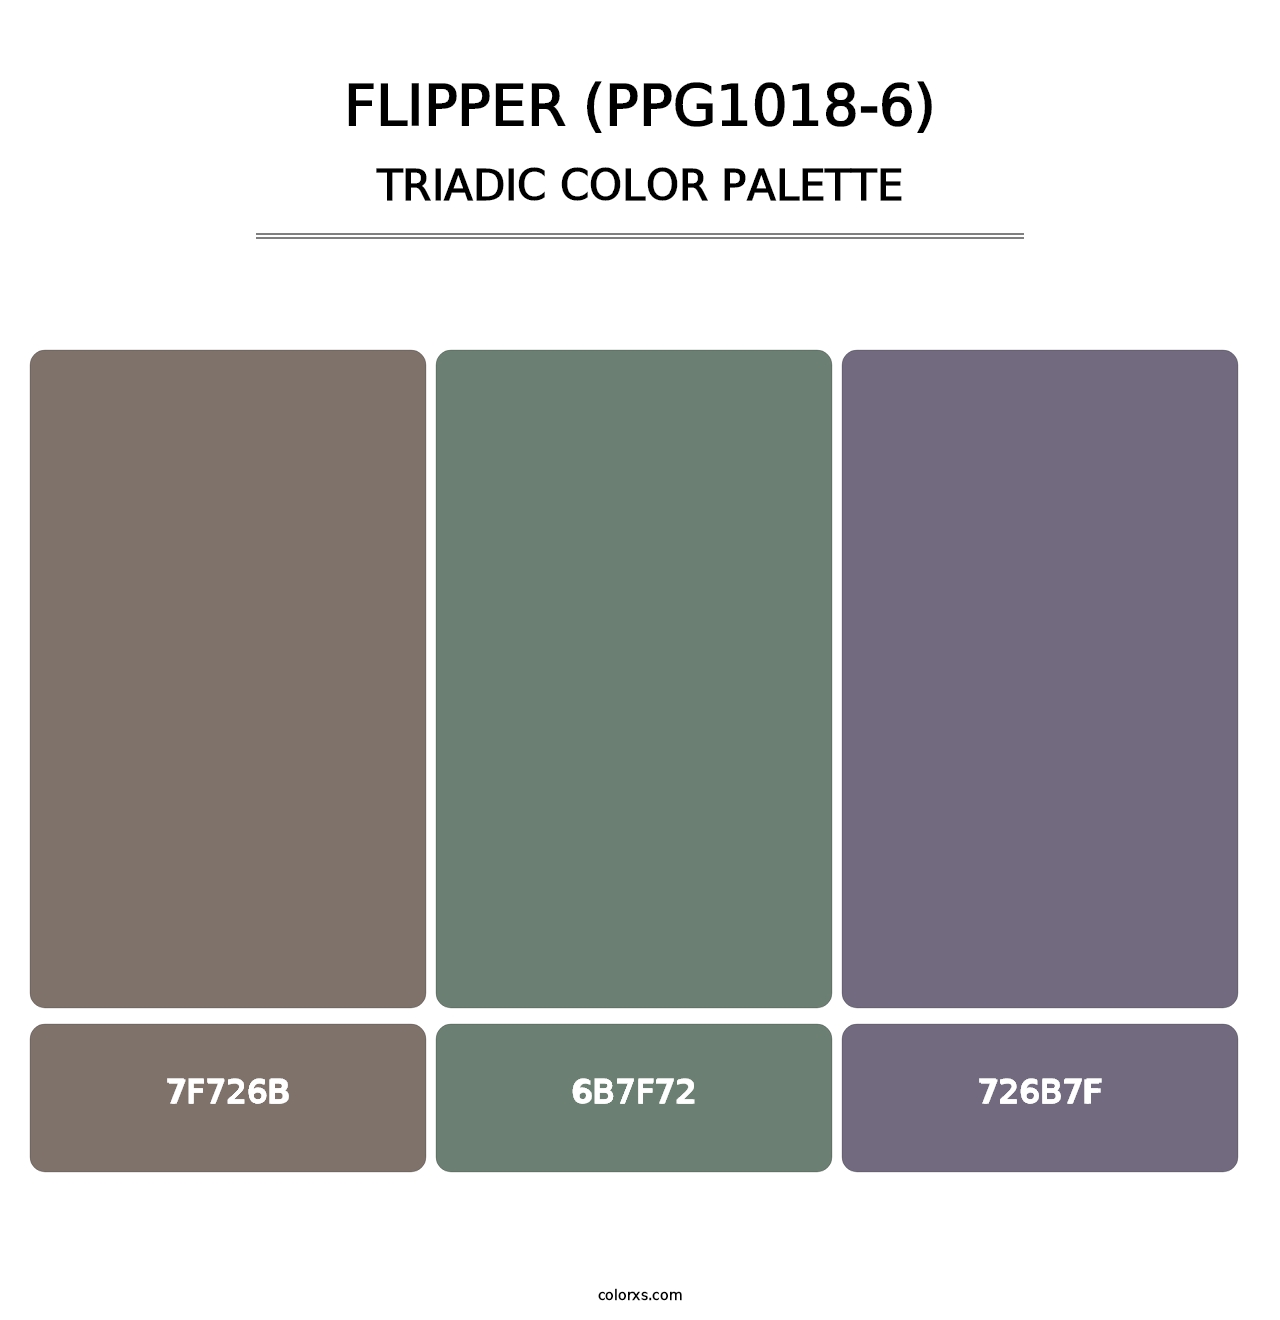 Flipper (PPG1018-6) - Triadic Color Palette